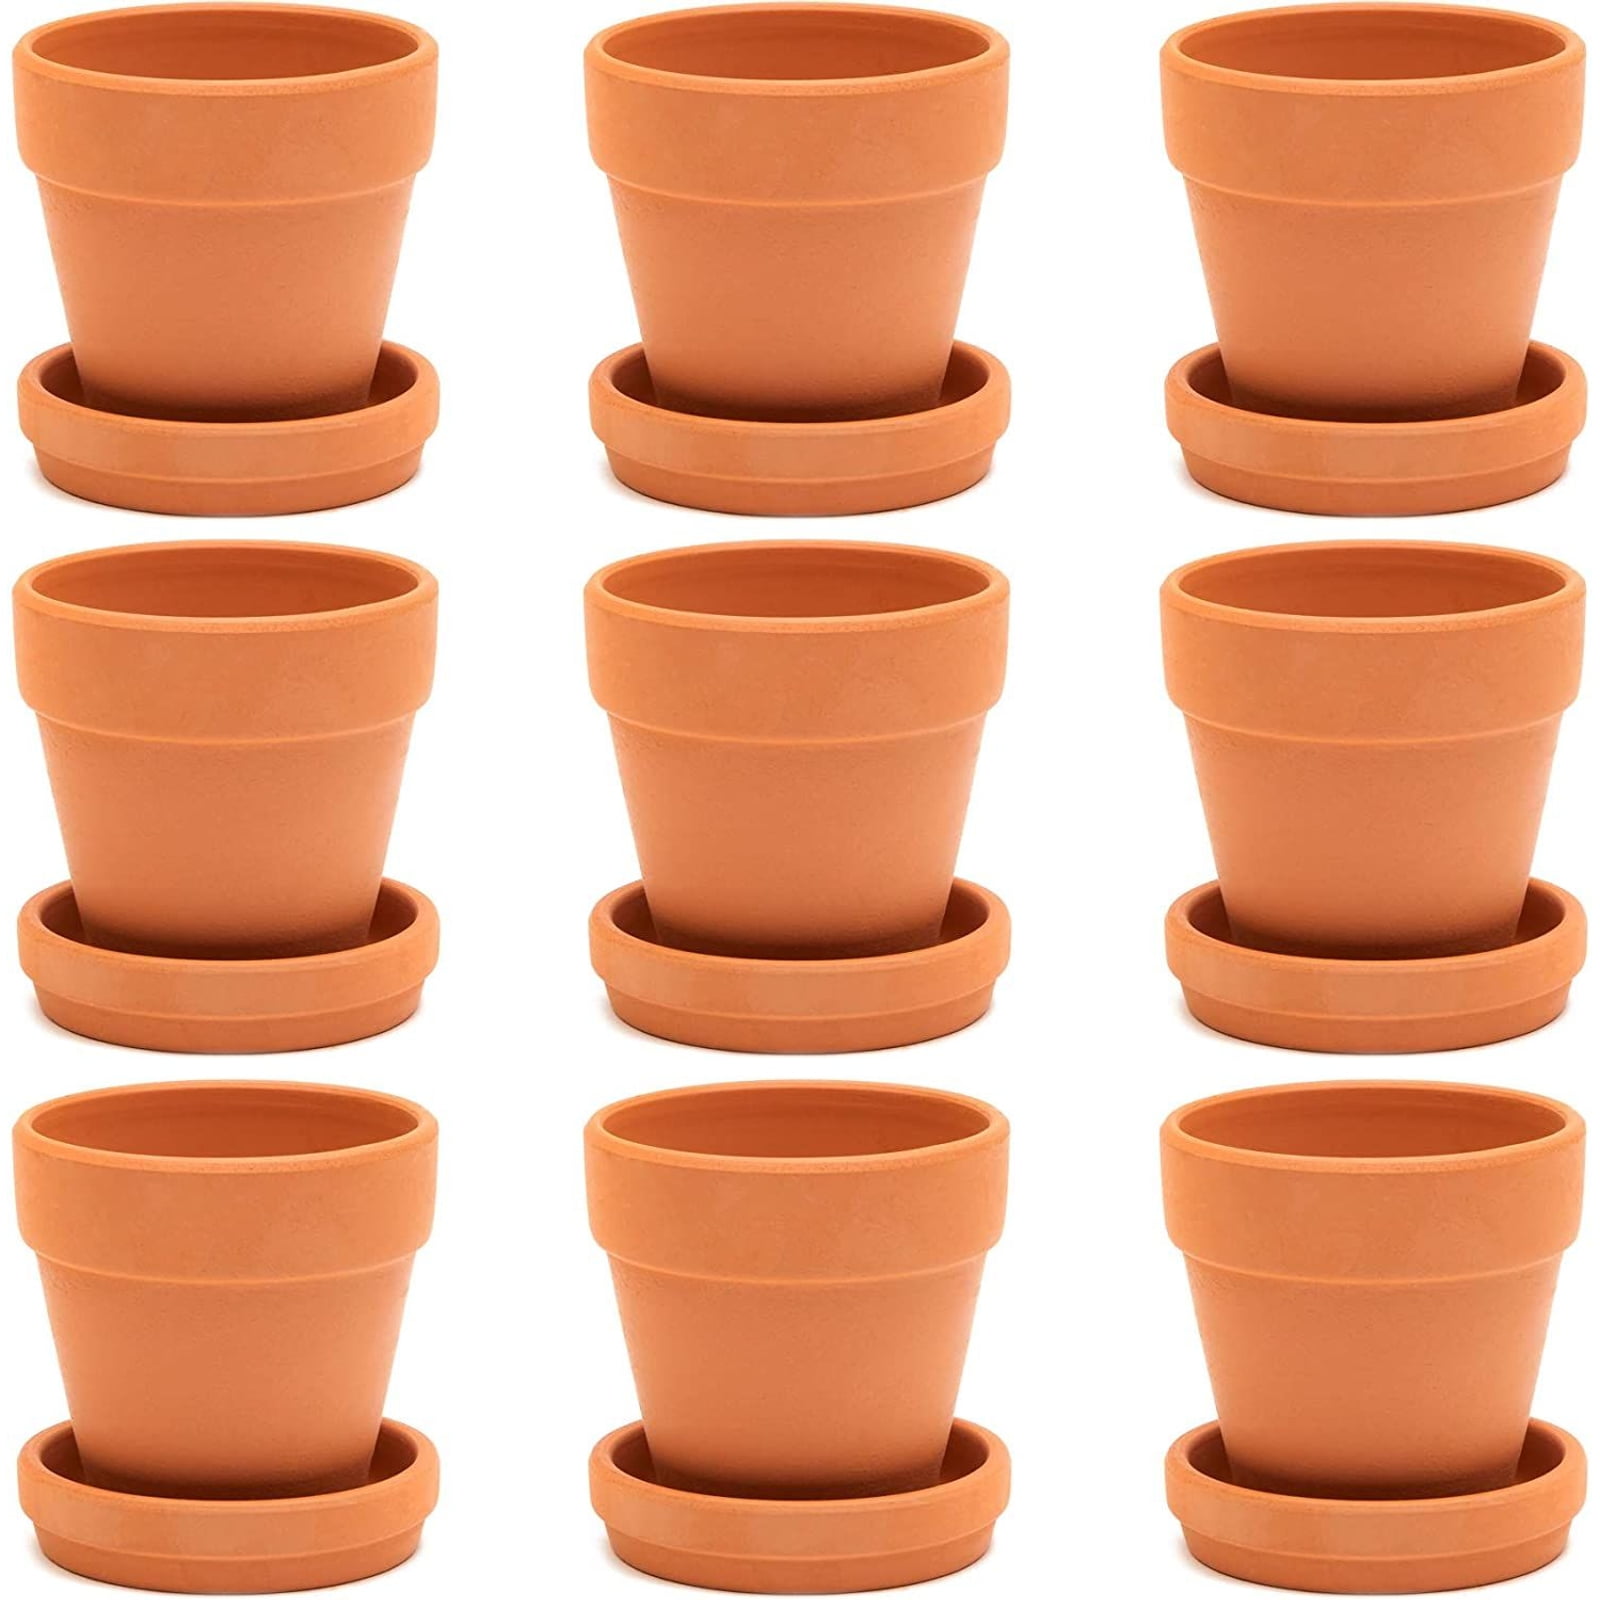 24 Pcs Small Mini Clay Pots Gold Pottery Planter Flower Pots 